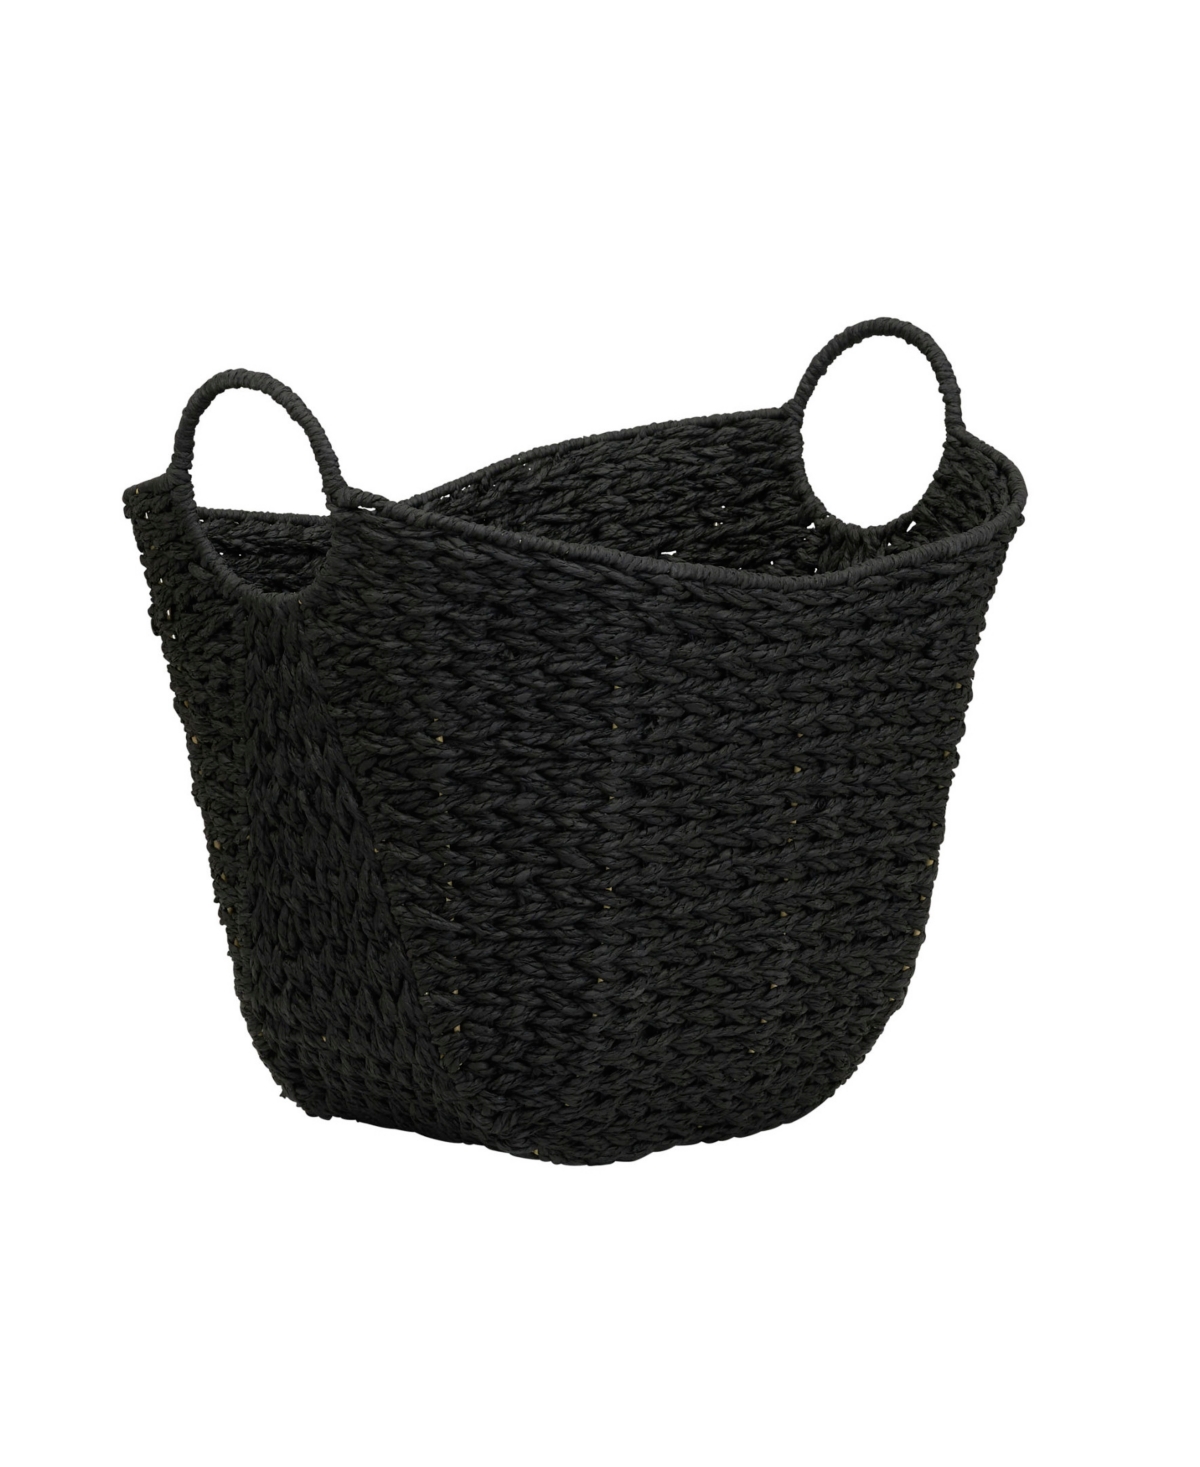 Paper Rope Basket with Handles - Black